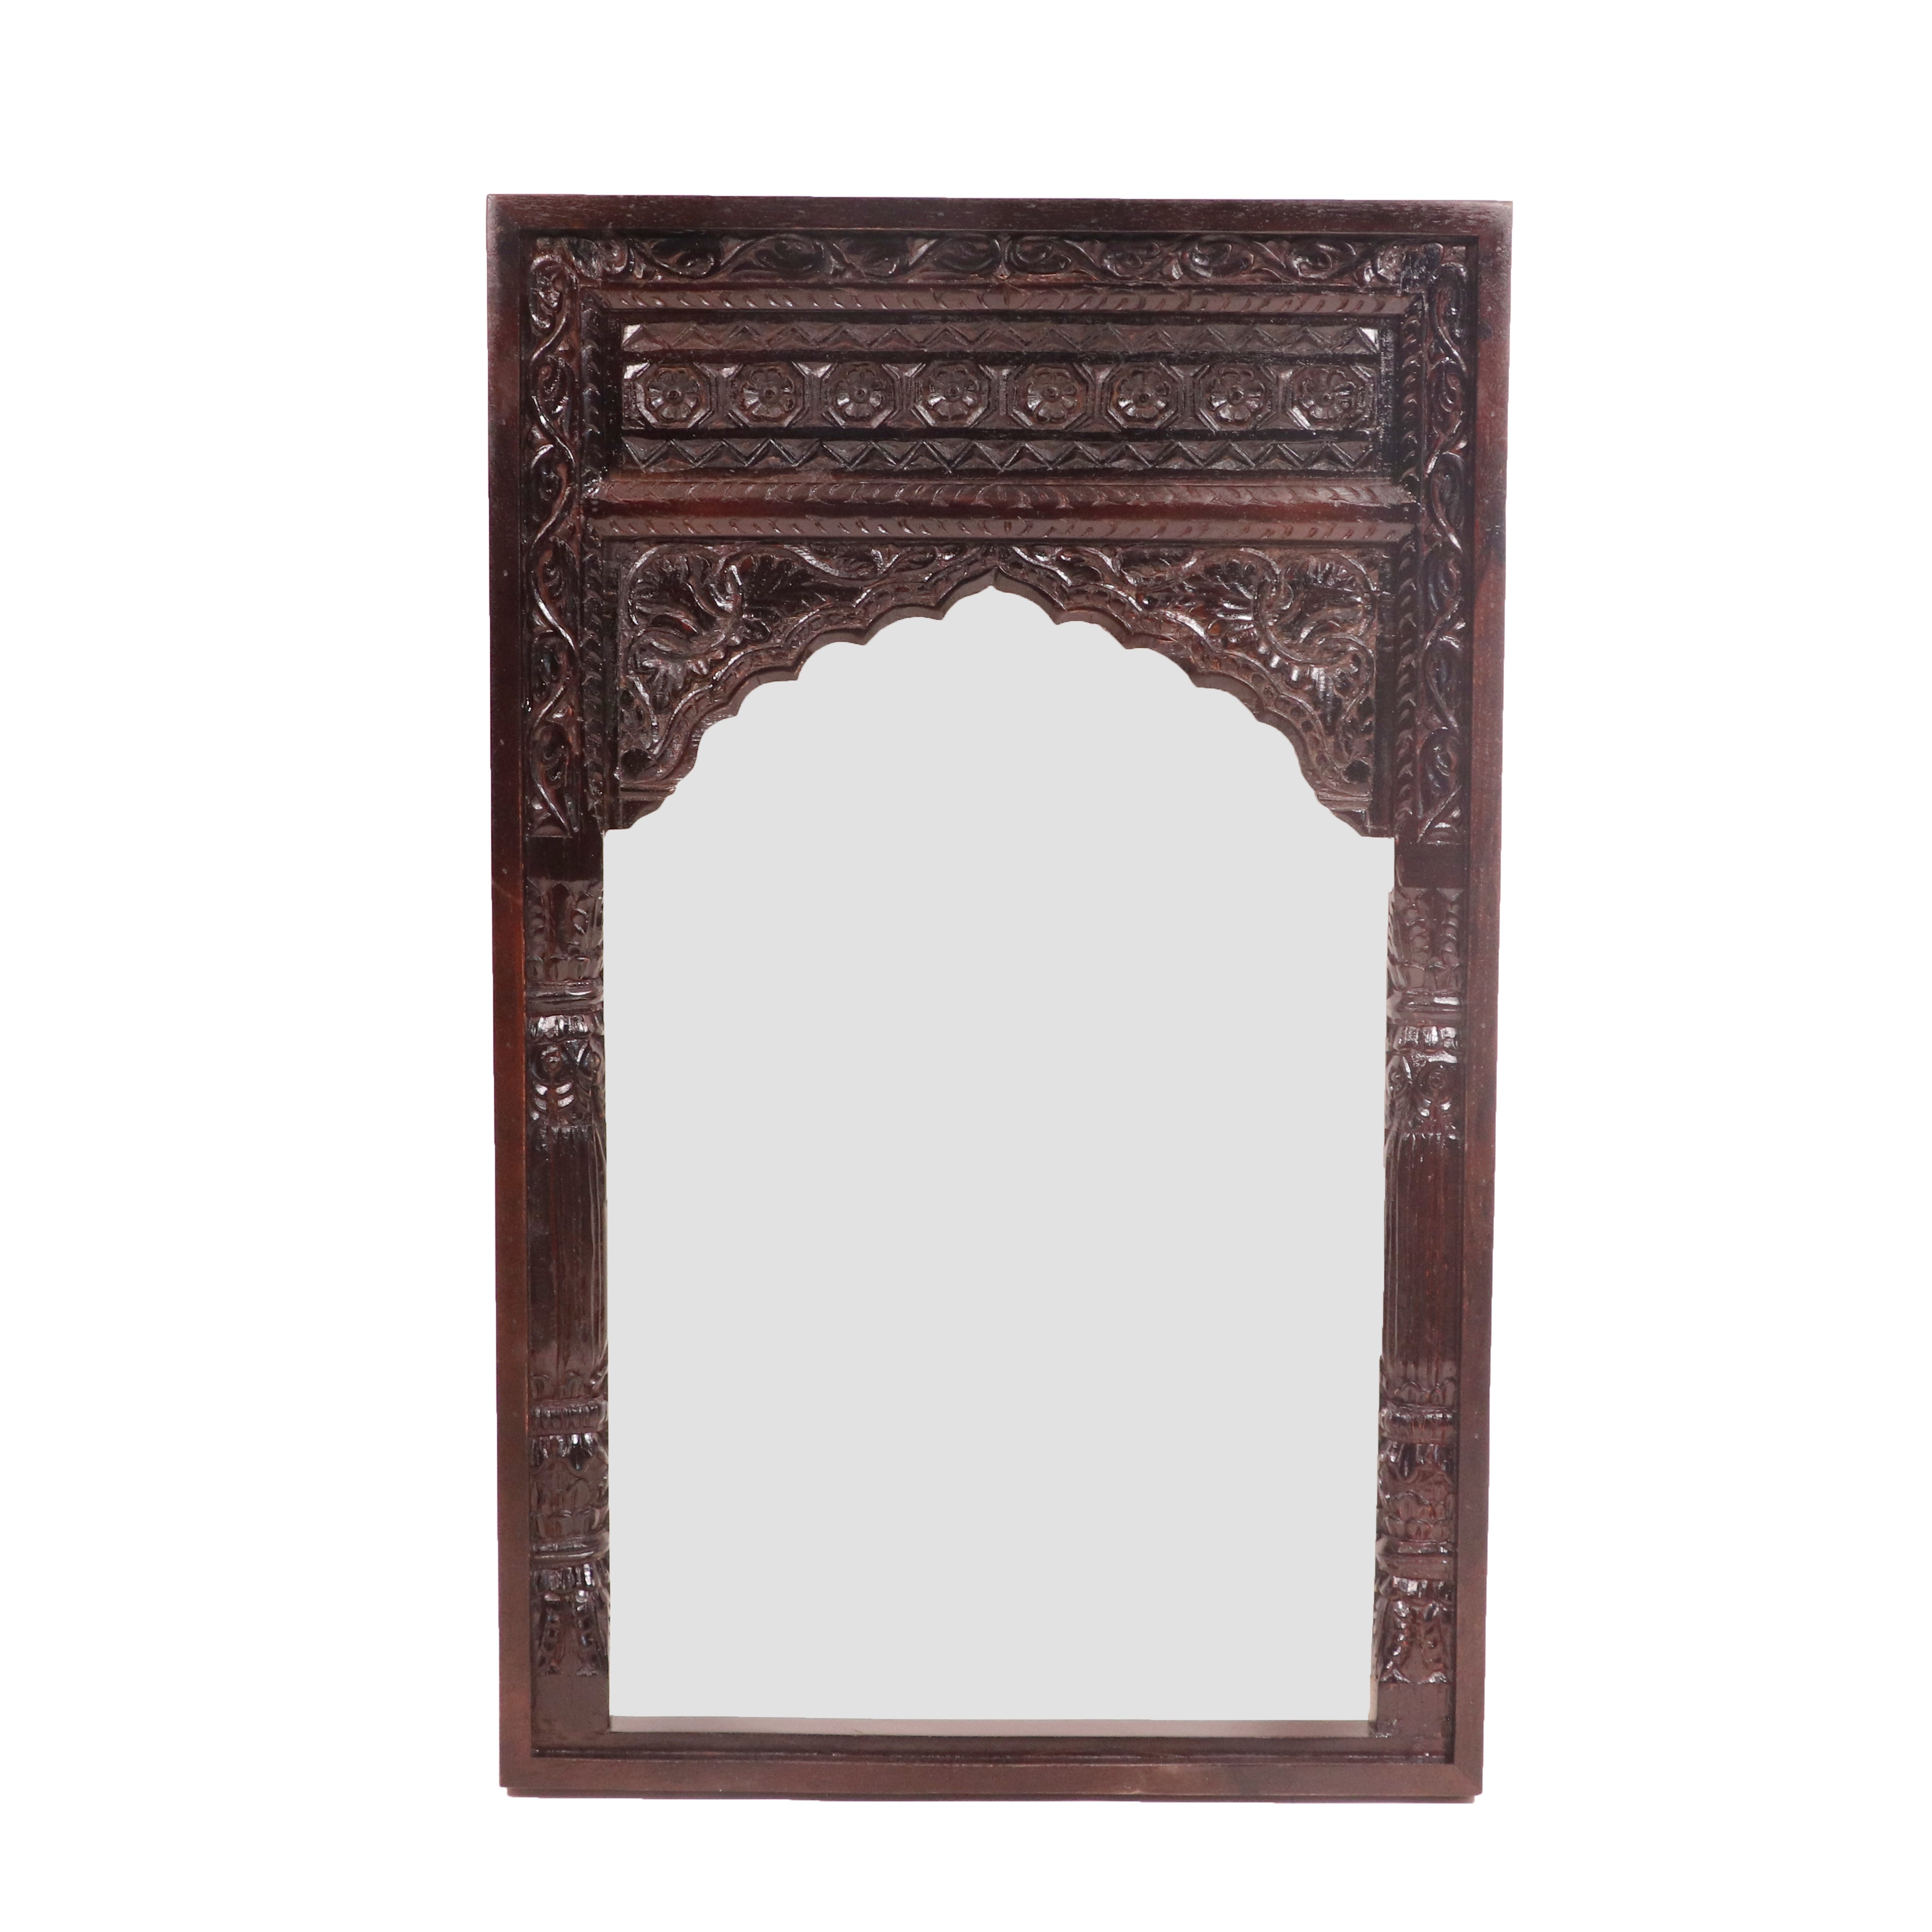 Ethnic Wooden Carved Mirror Mirror